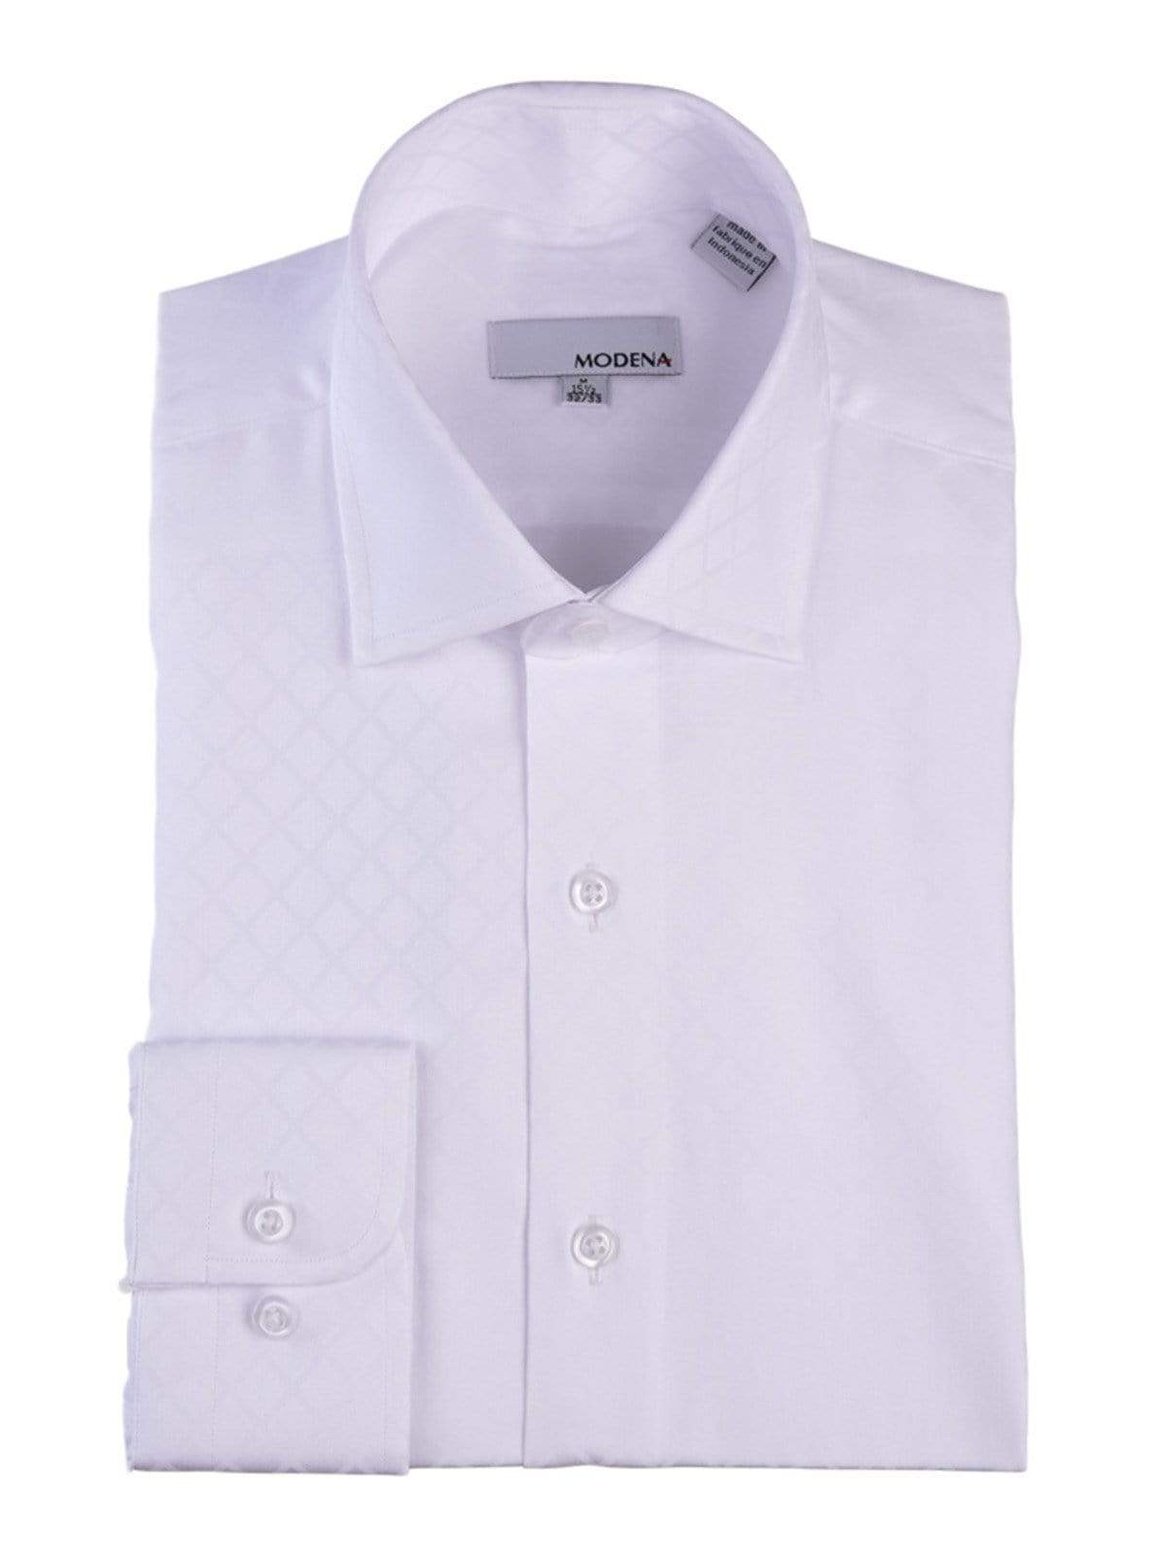 Modena Sale Shirts 17 36/37 Regular Fit White Tonal Diamond Pattern Spread Collar Cotton Blend Dress Shirt